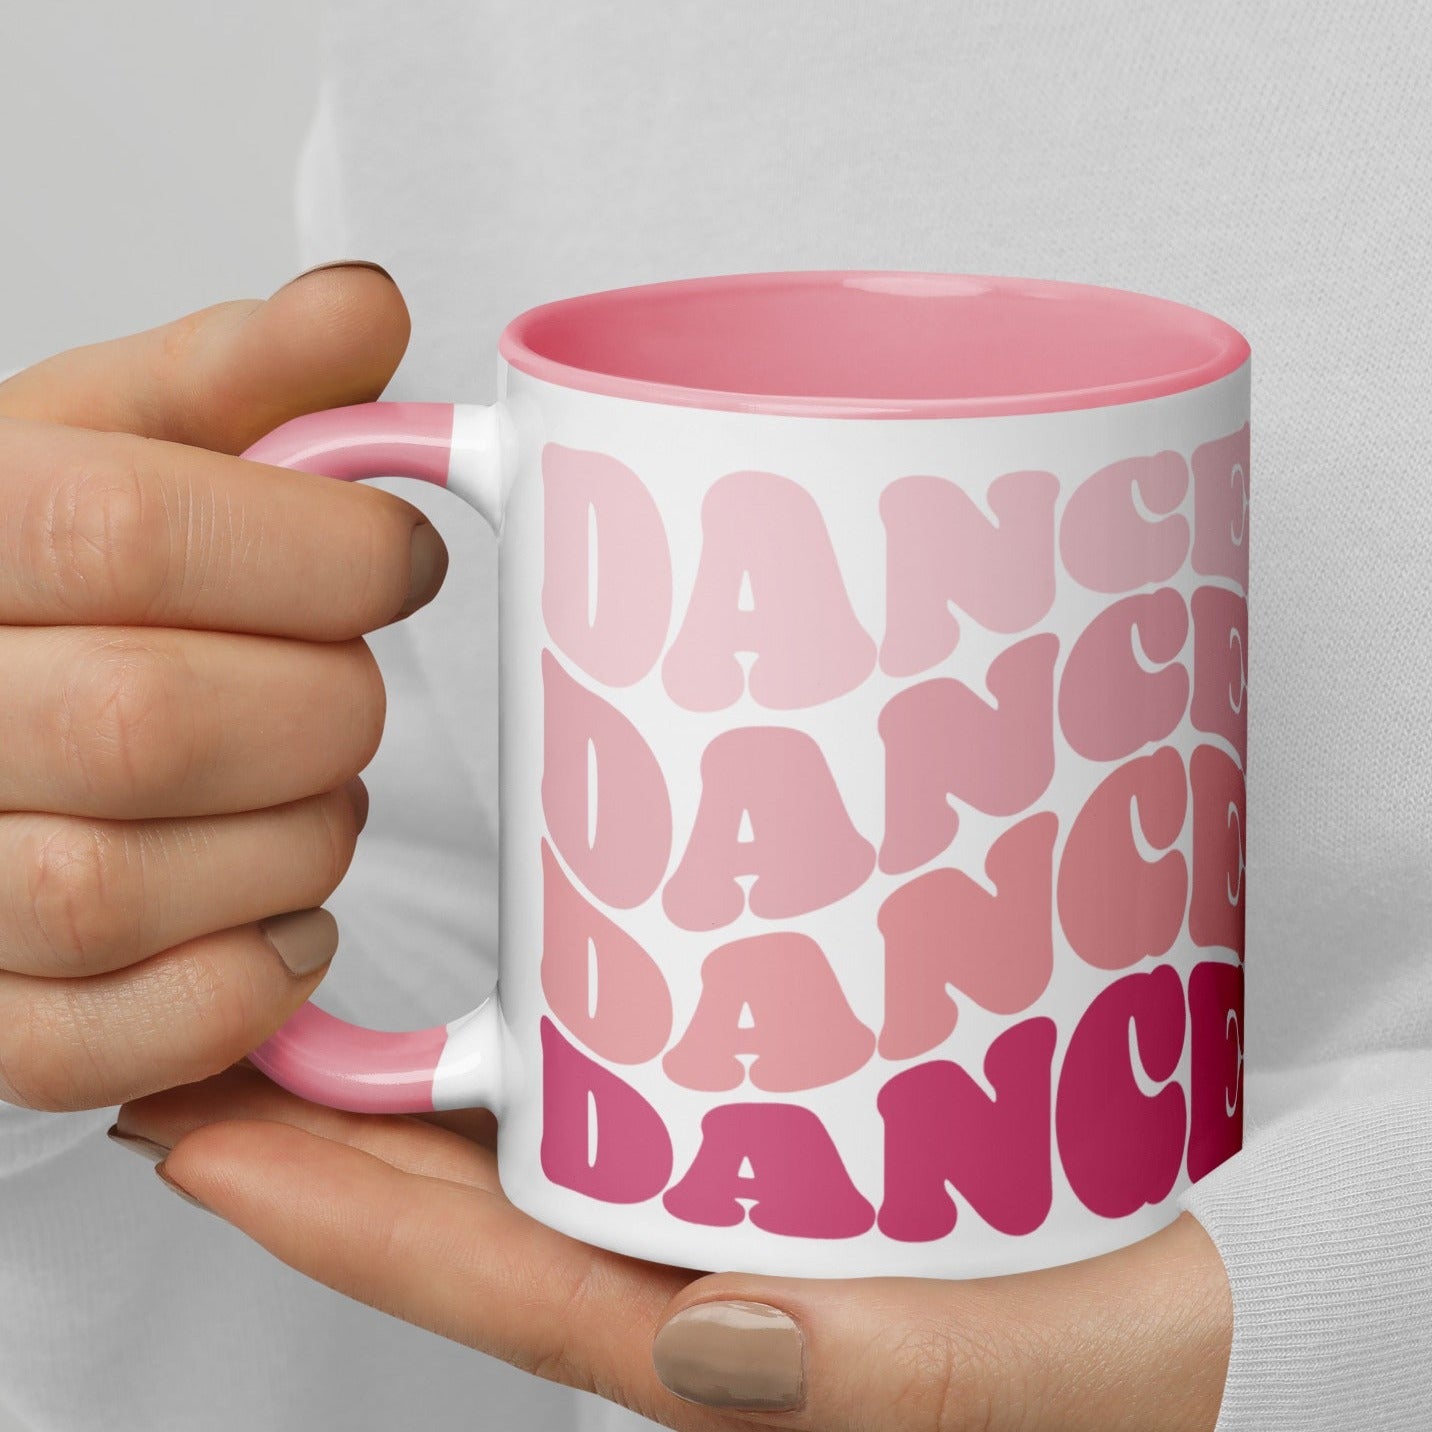 DANCE DANCE DANCE Mug with Pink Inside